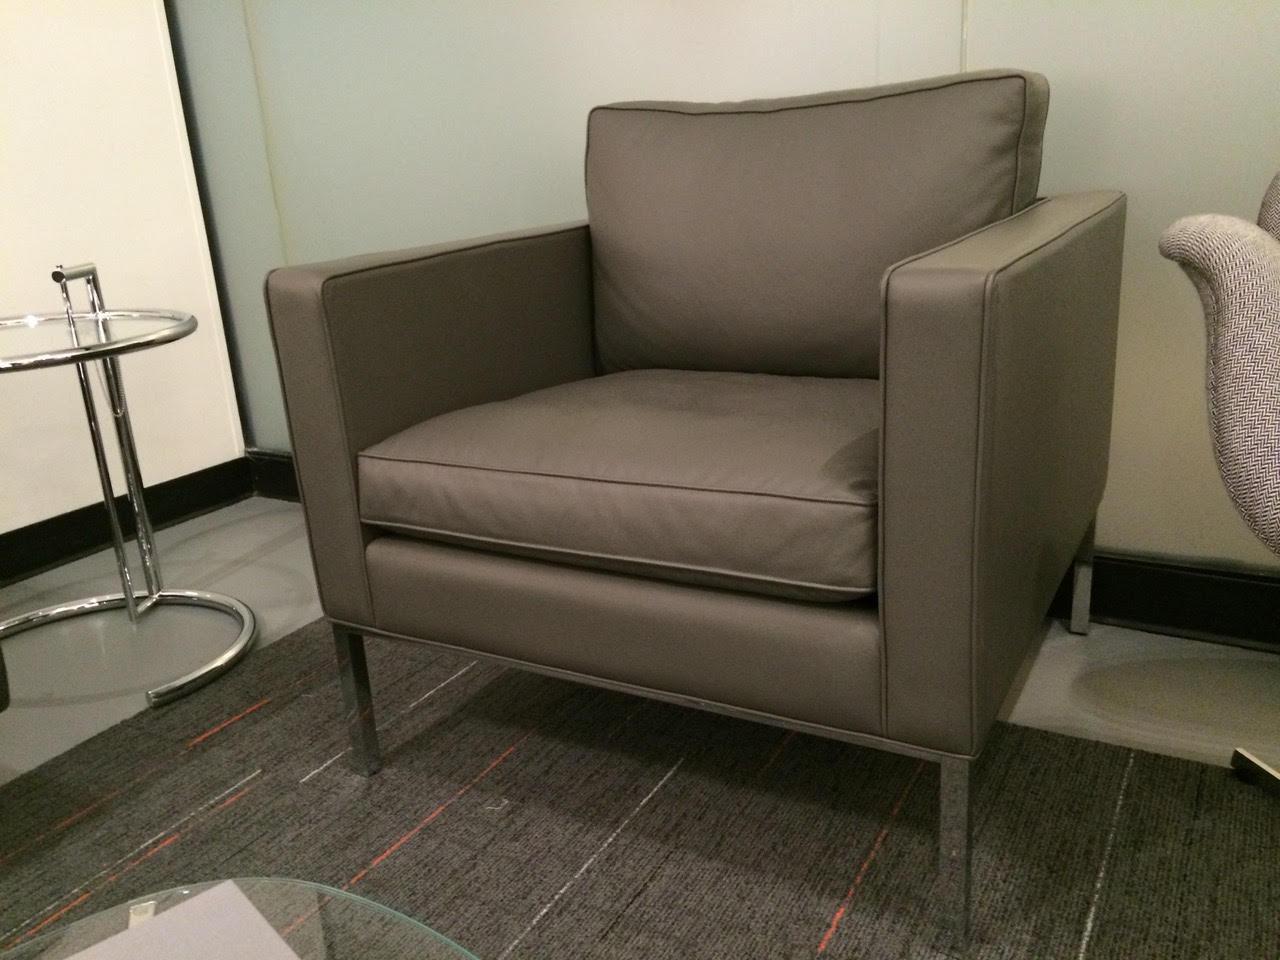 905 comfort lounge chair
Polished chrome legs
UPH, COM: in Panama # 5290 gunmetal
Regular $4,280 each.